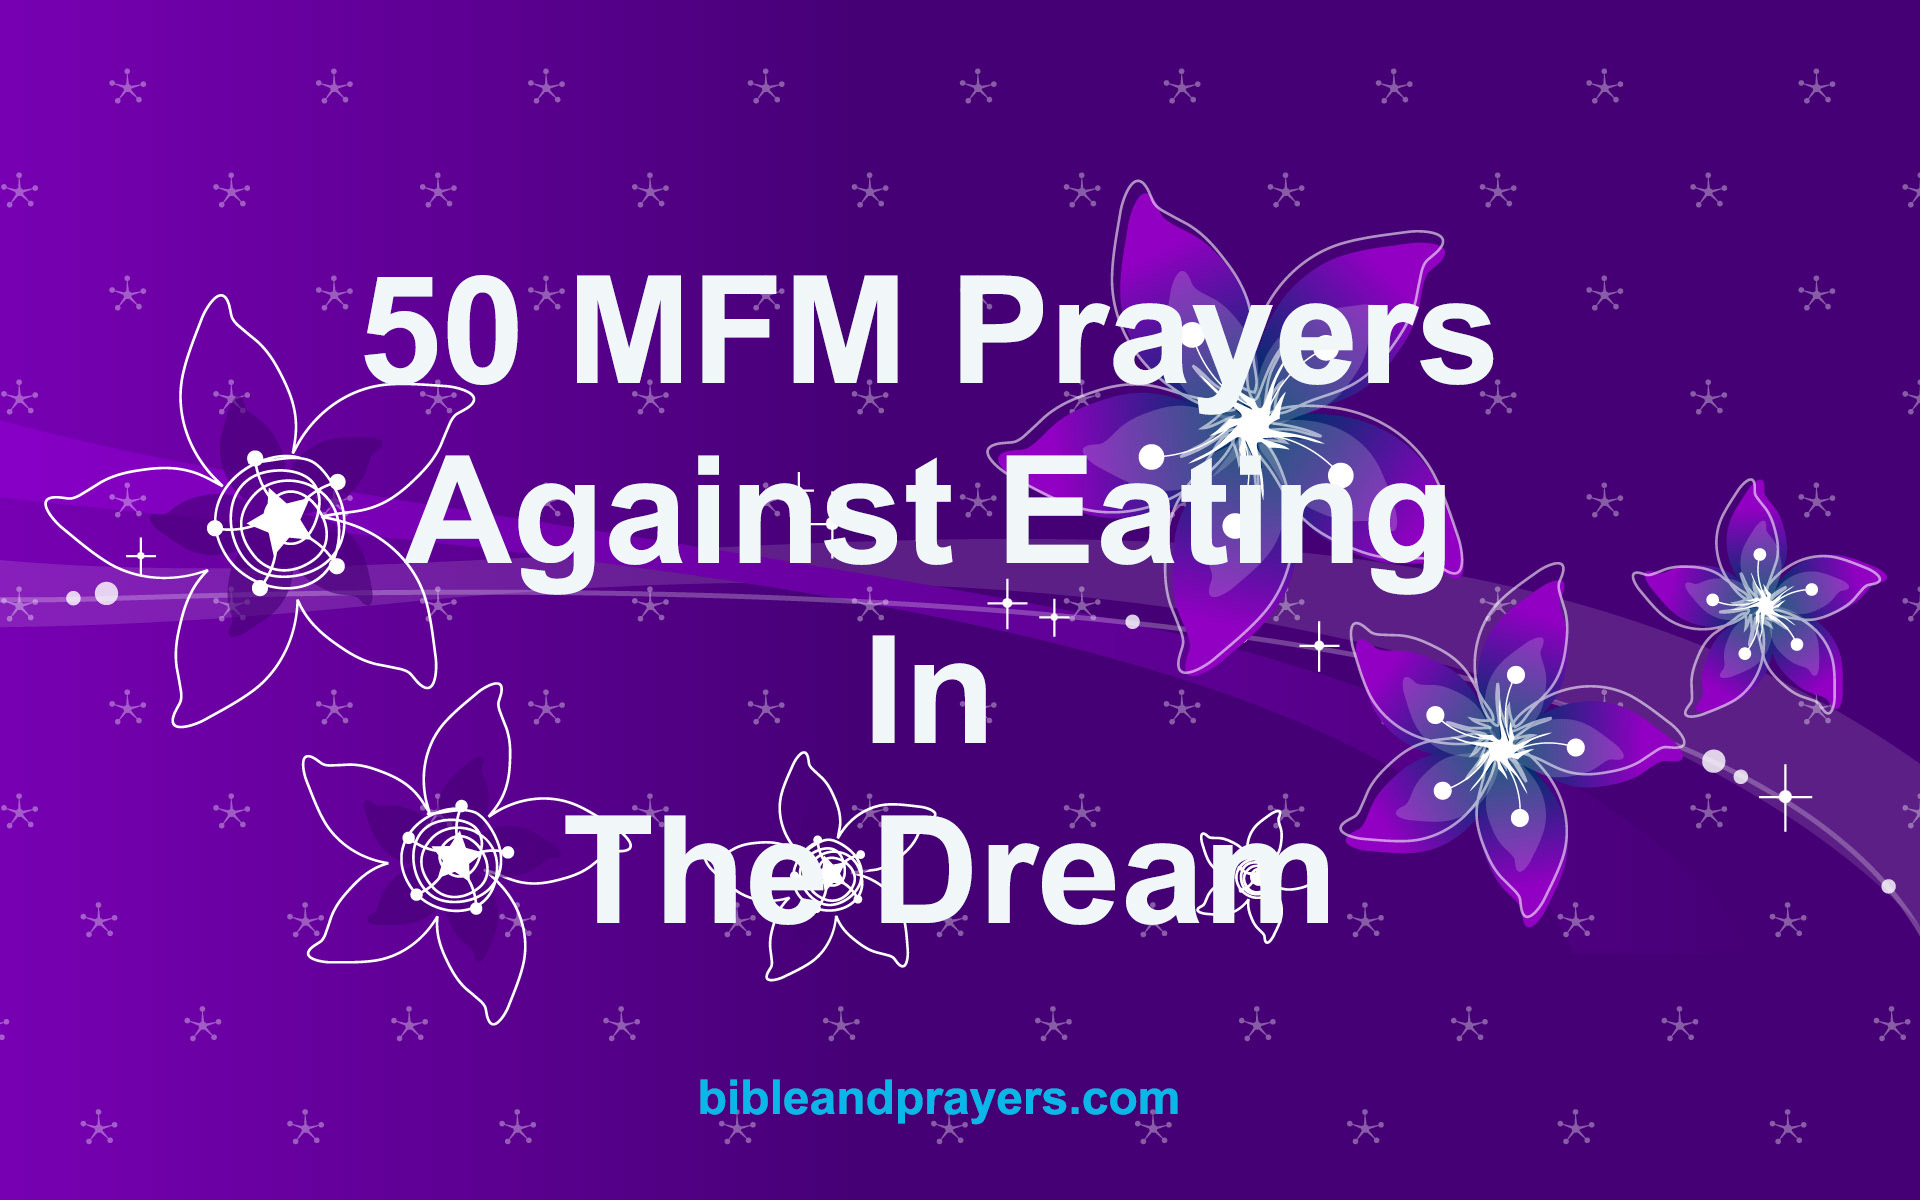 MFM Prayers Against Eating In The Dream